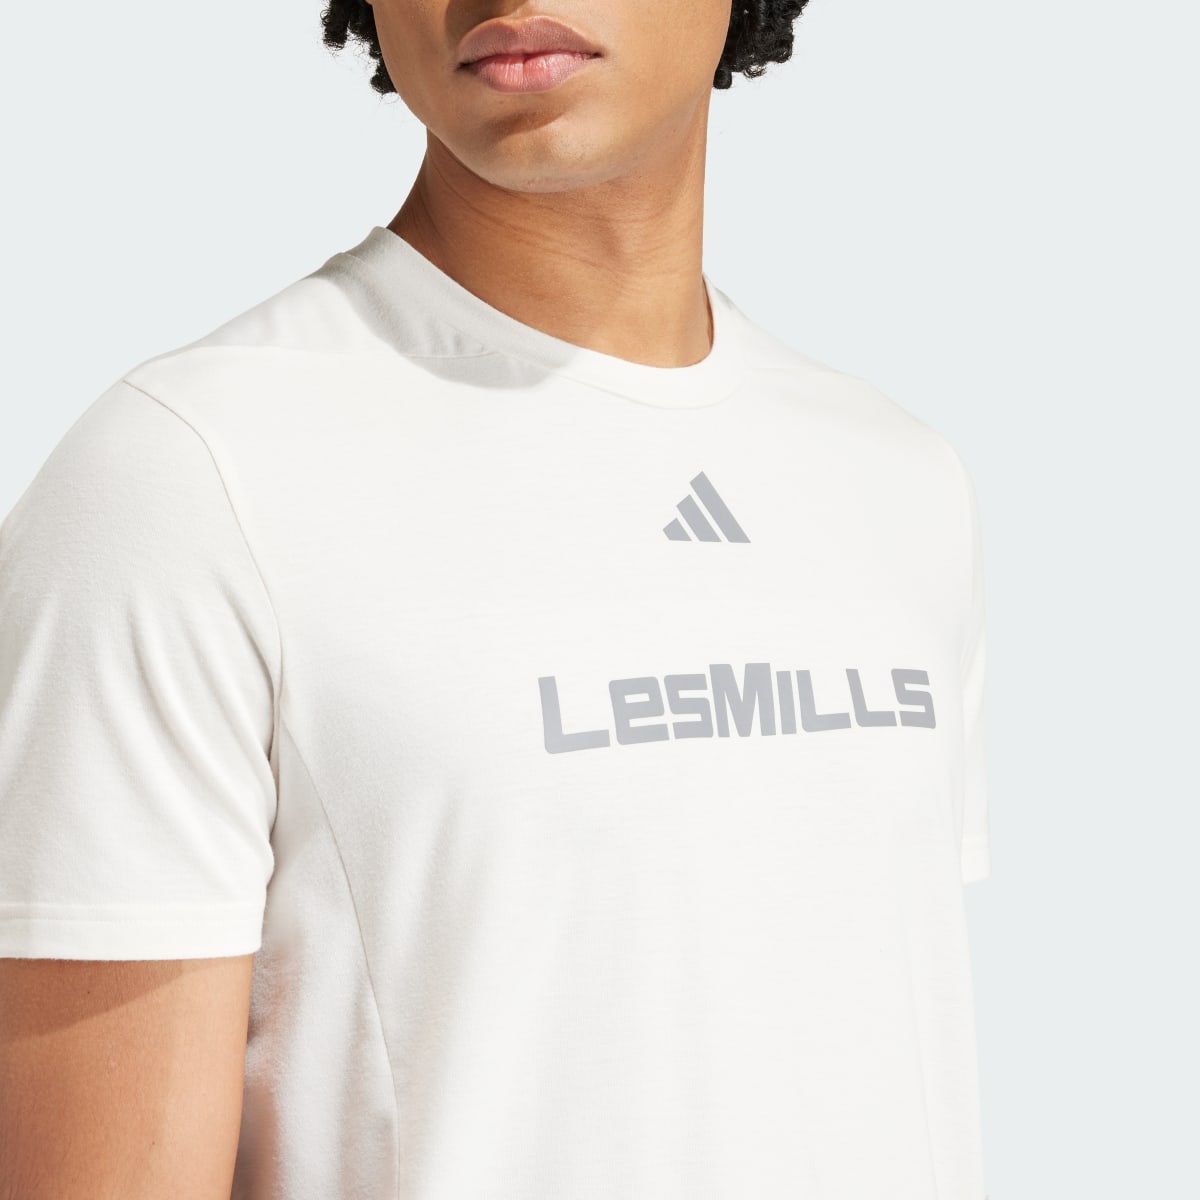 Adidas Les Mills Graphic Tee. 6